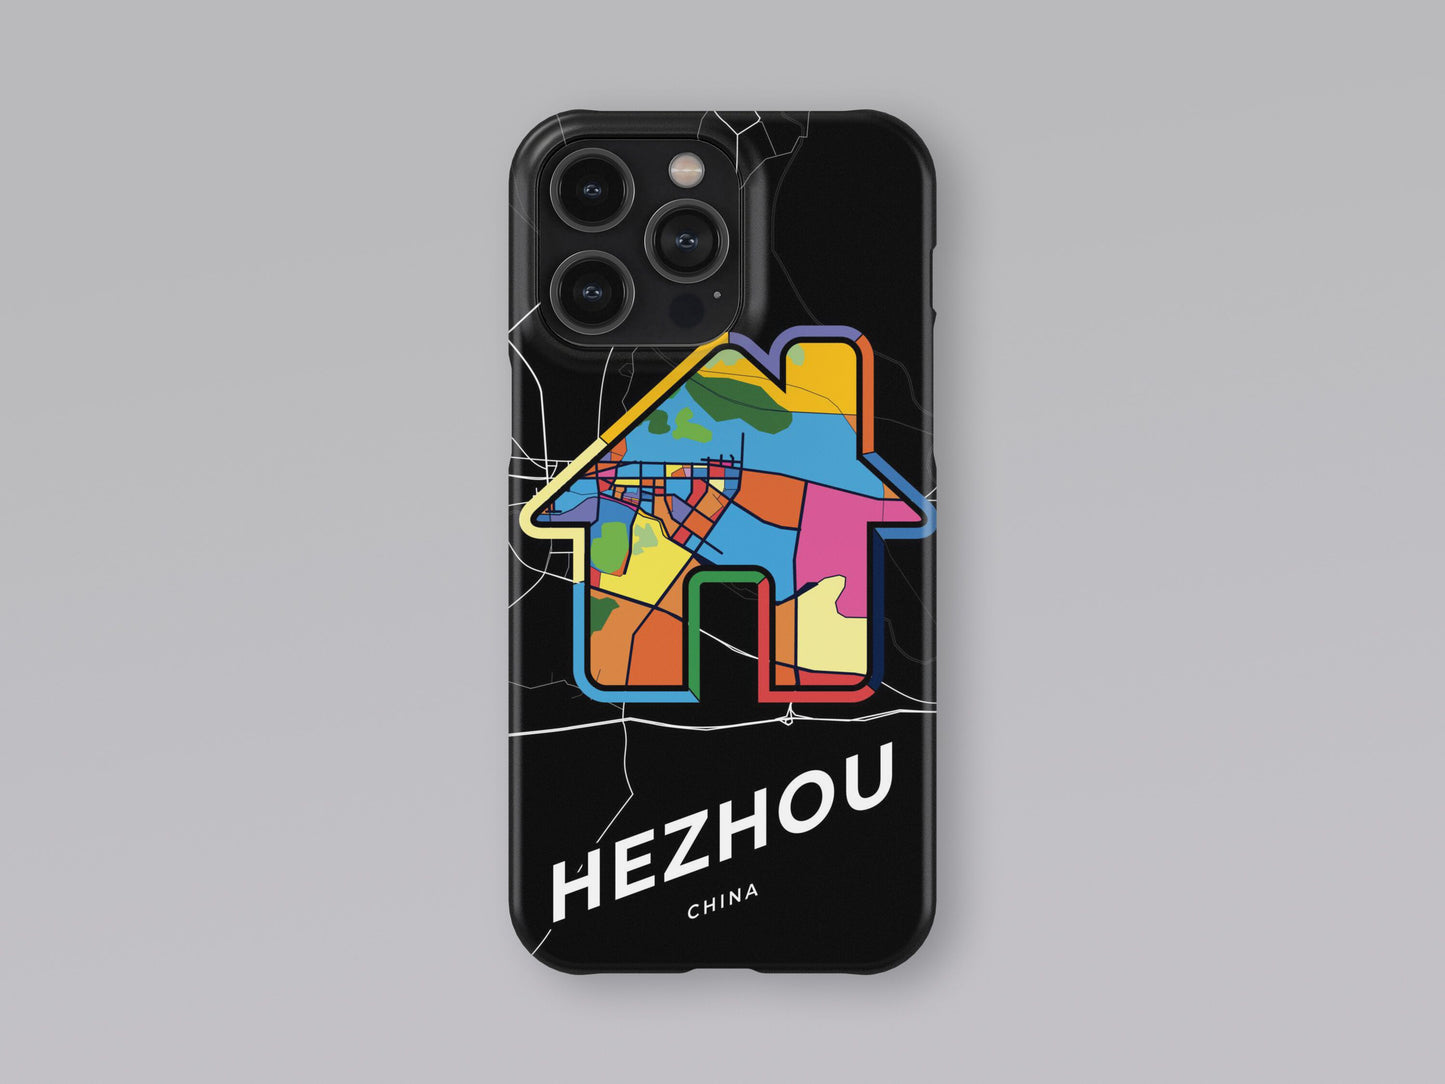 Hezhou China slim phone case with colorful icon. Birthday, wedding or housewarming gift. Couple match cases. 3